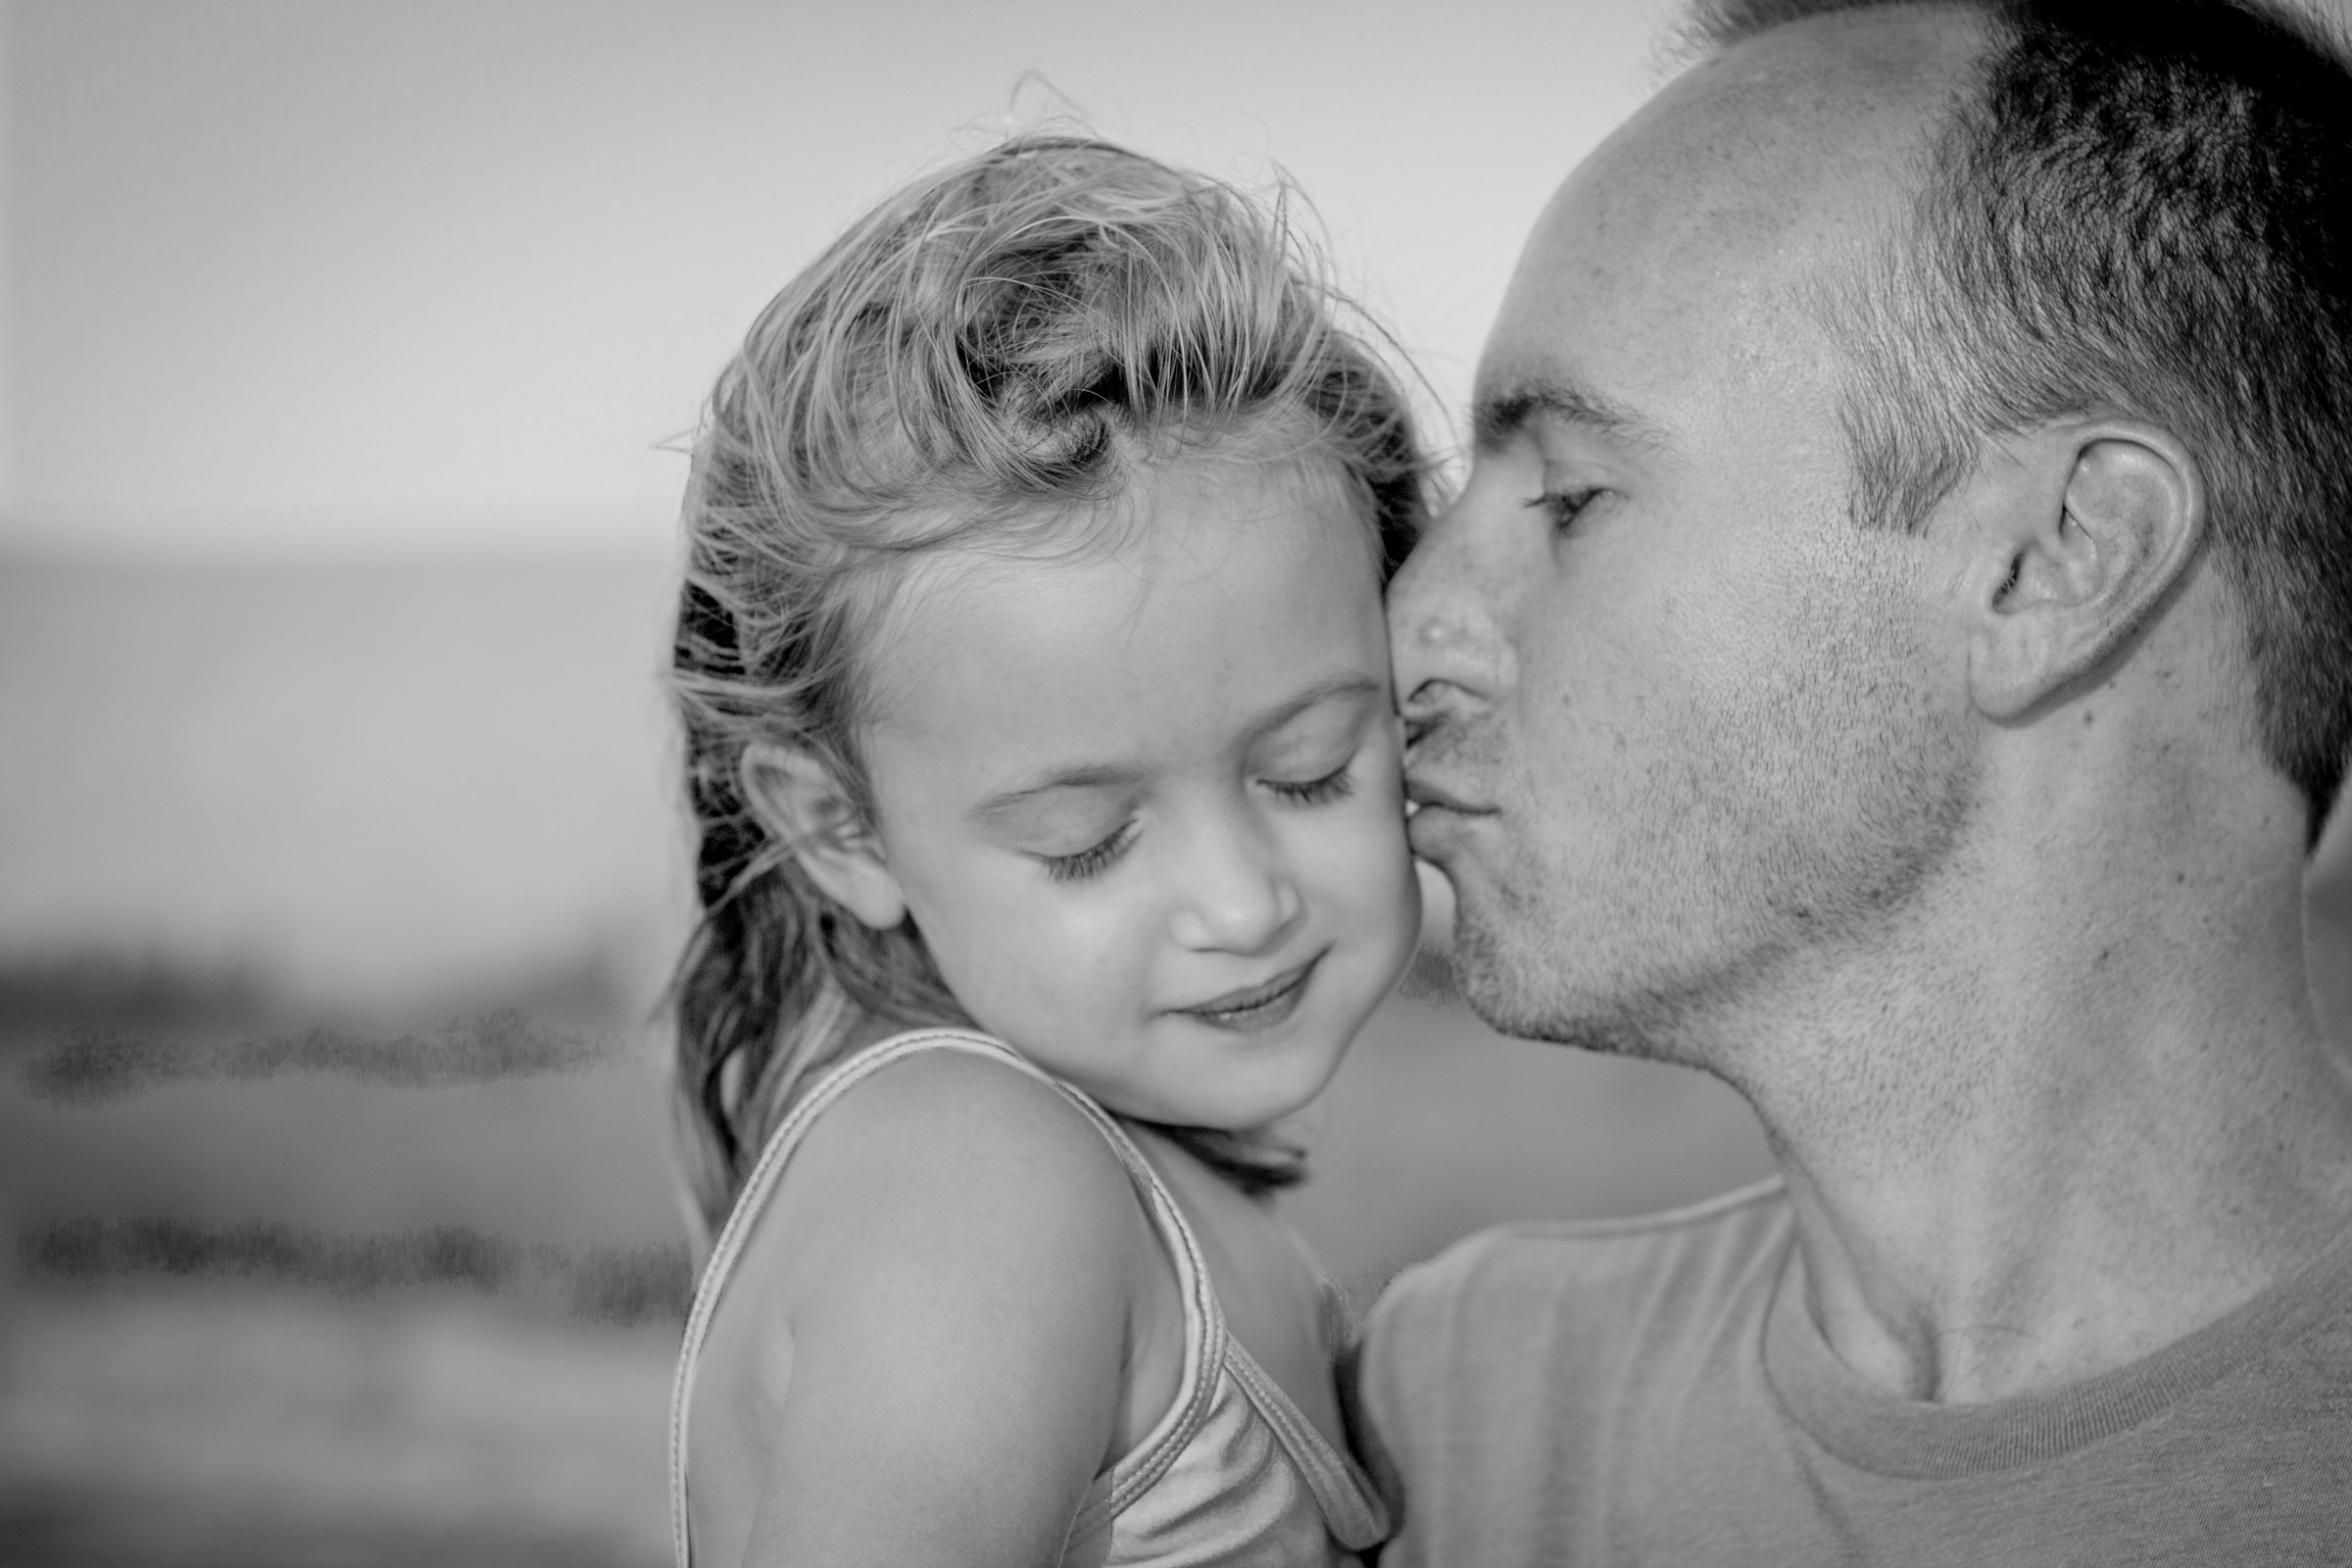 Padre besando a su hija en la mejilla | Foto: Unsplash